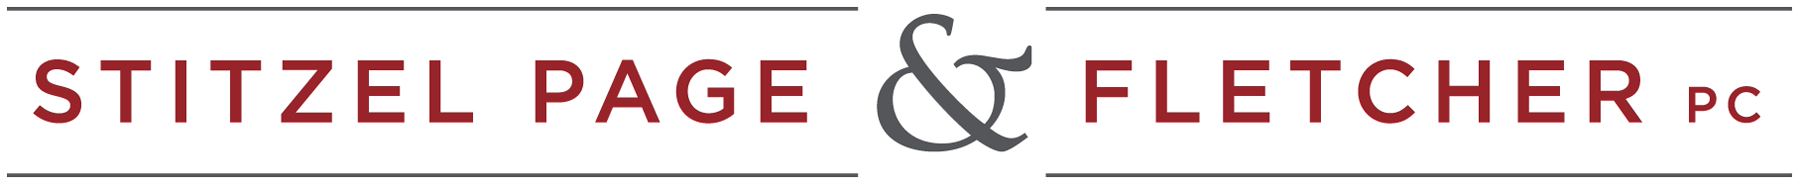 Stitzel Page & Fletcher, PC Logo